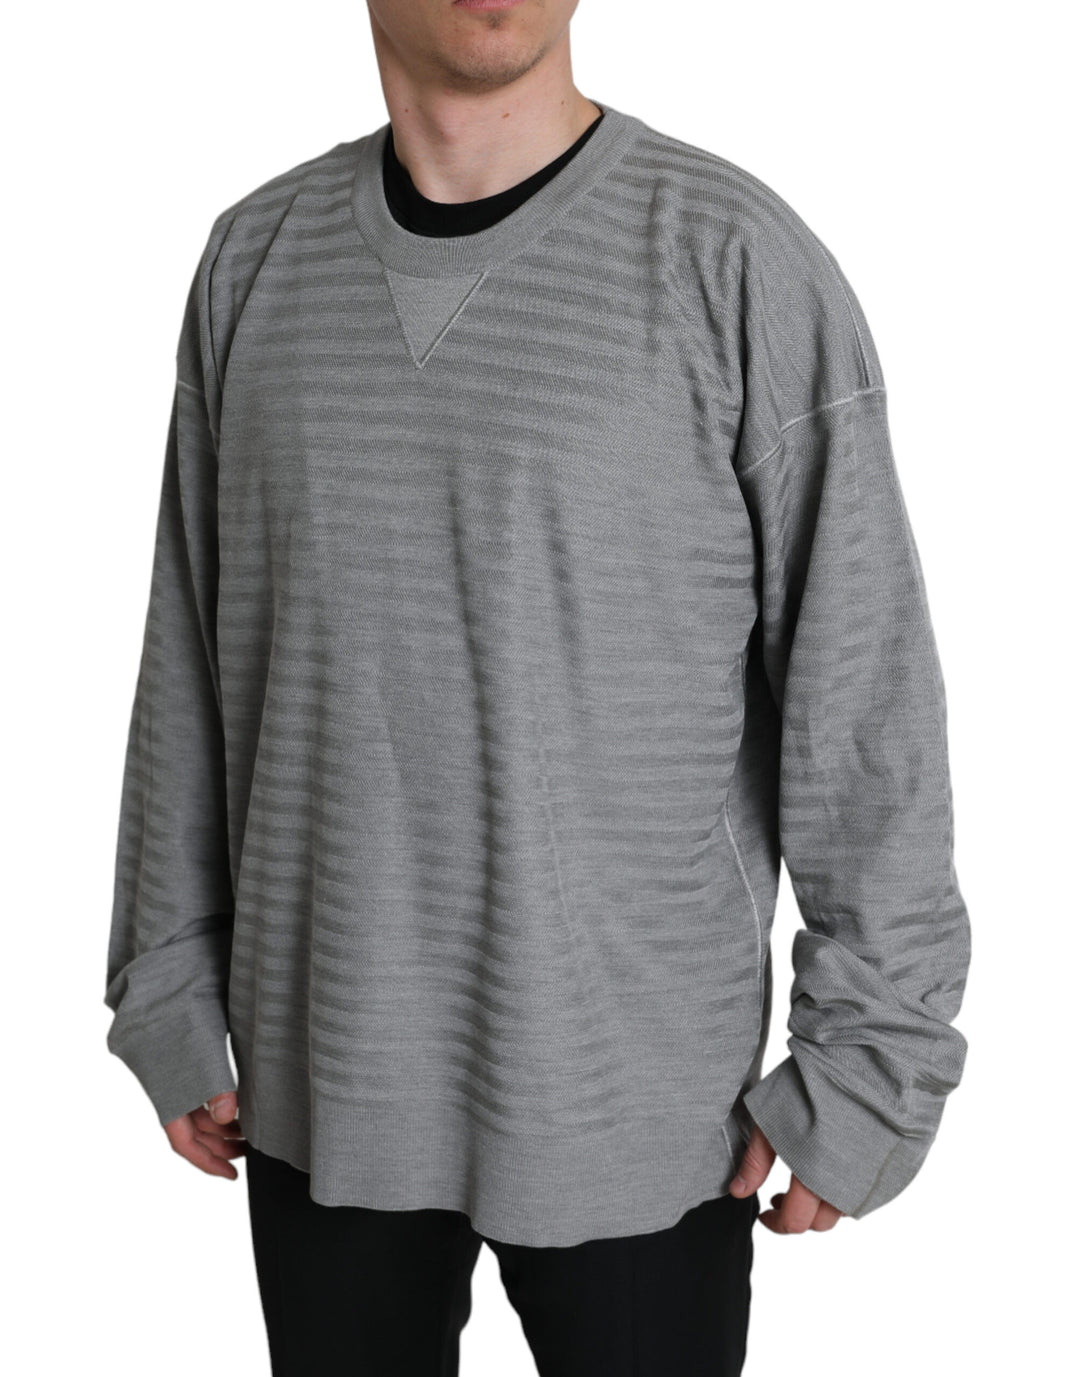 Dolce & Gabbana Gray Crewneck Pullover Silk Top Sweater